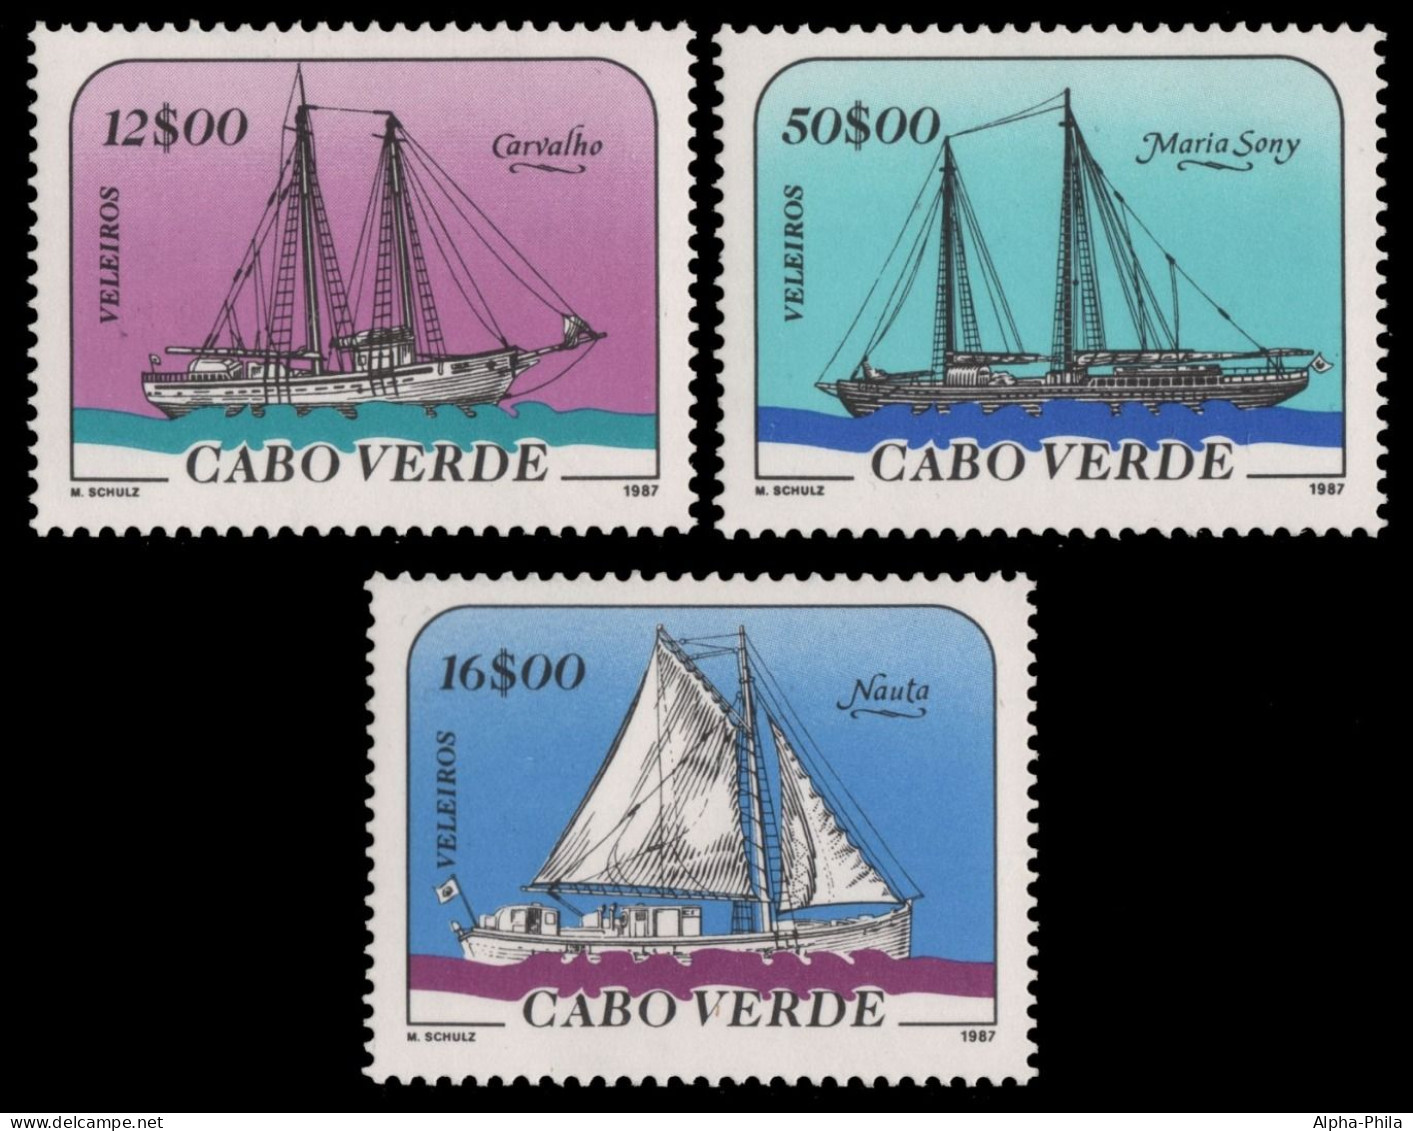 Kap Verde 1987 - Mi-Nr. 523-525 ** - MNH - Schiffe / Ships - Cape Verde